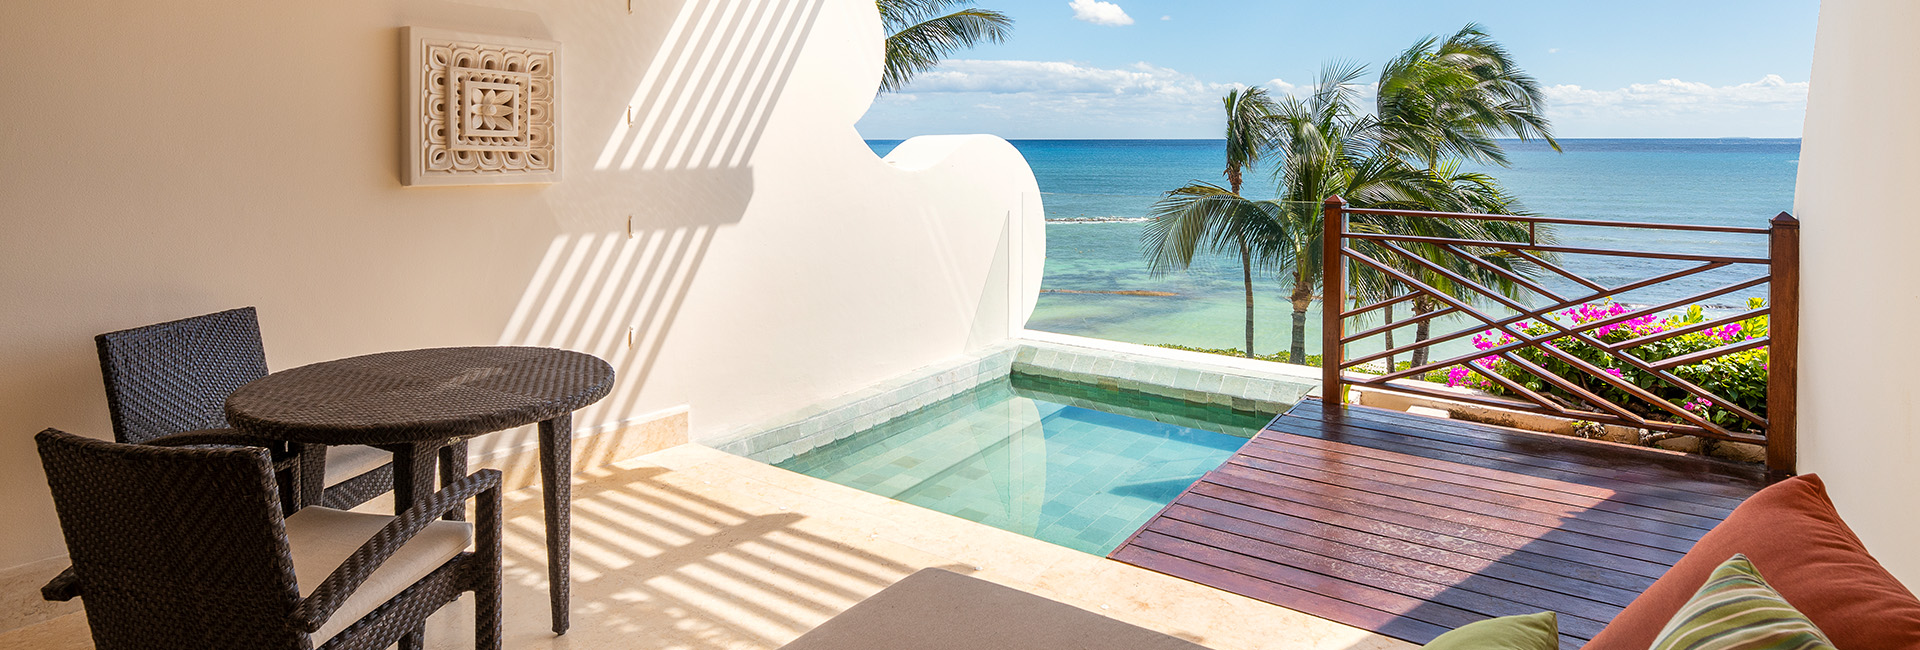 Deluxe Suite with Private Pool | Nova Luxury Suites Hotel Santorini, Pyrgos